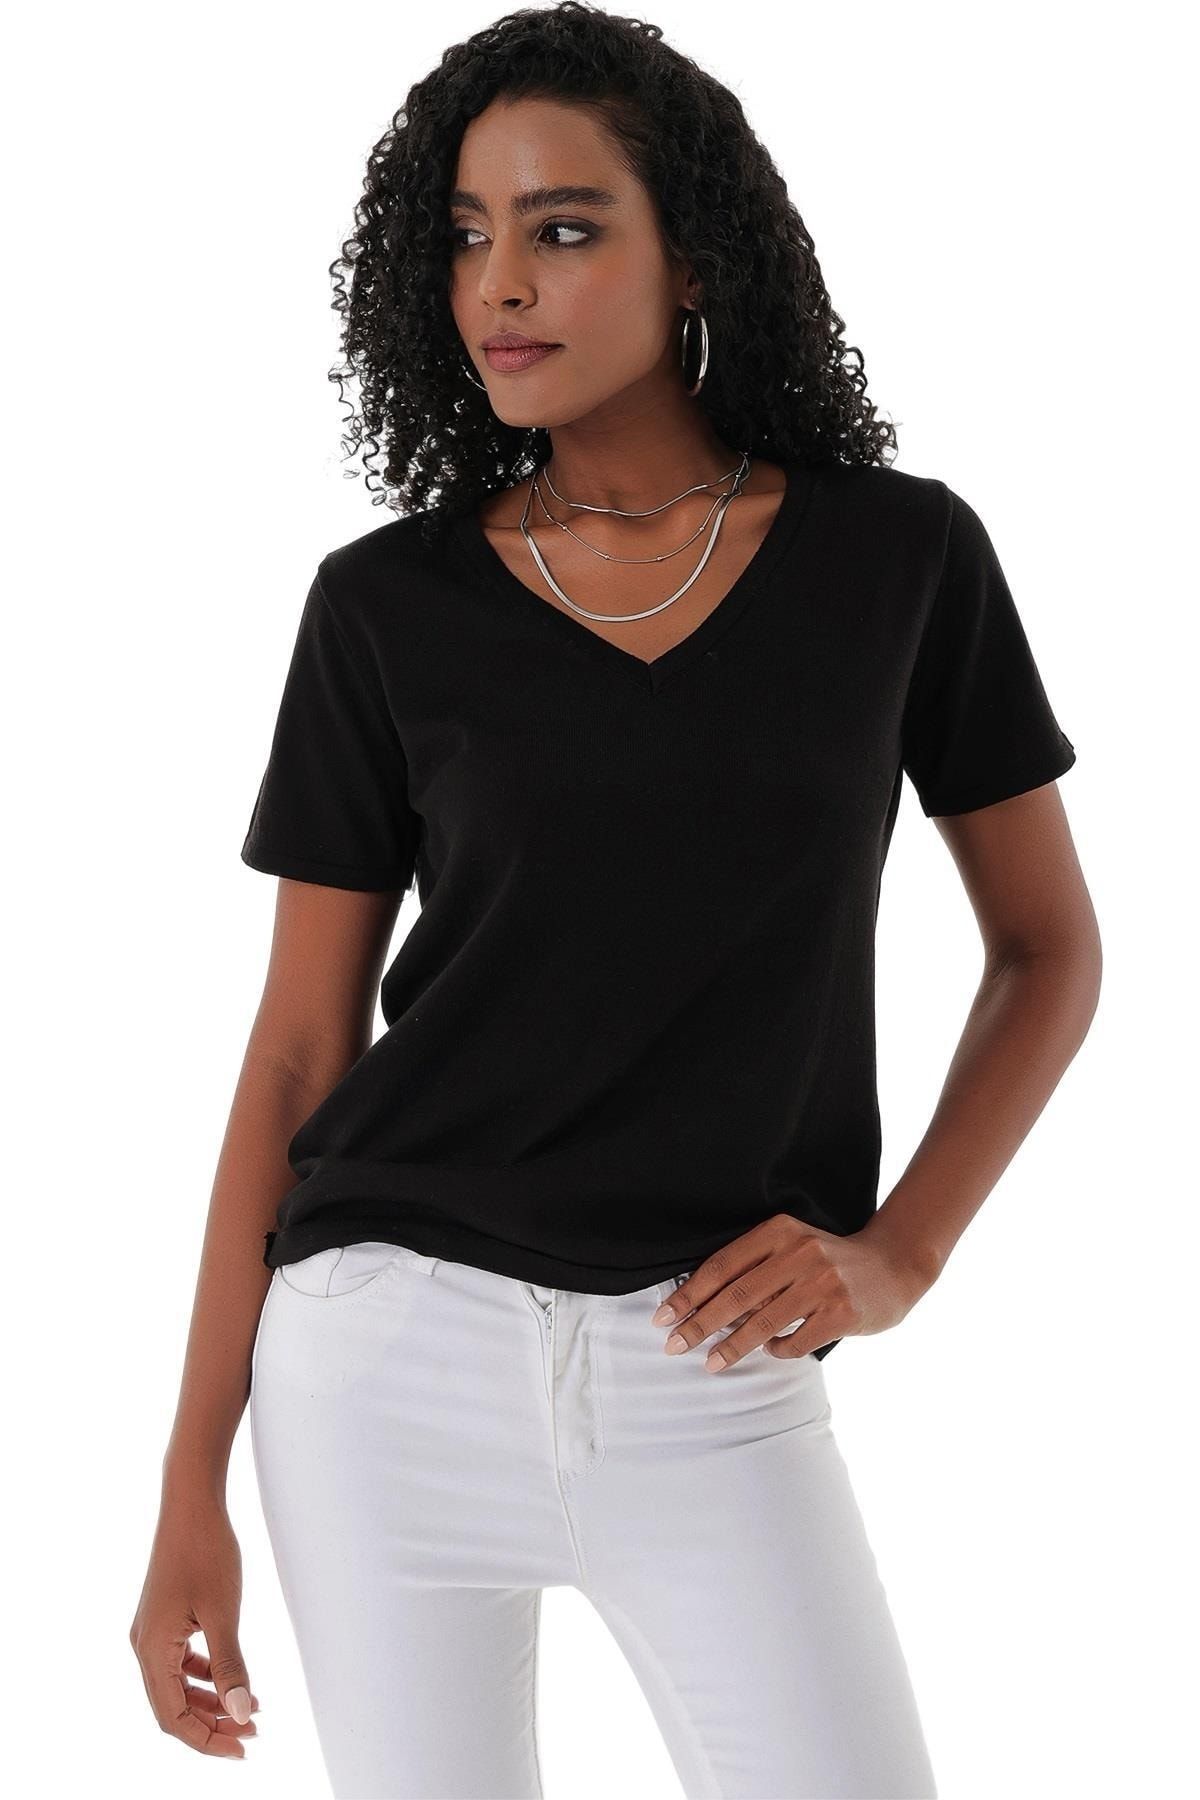 CHUBA Kadın V Yaka Pamuklu Basic Ince Triko T-shirt Siyah 23s1003